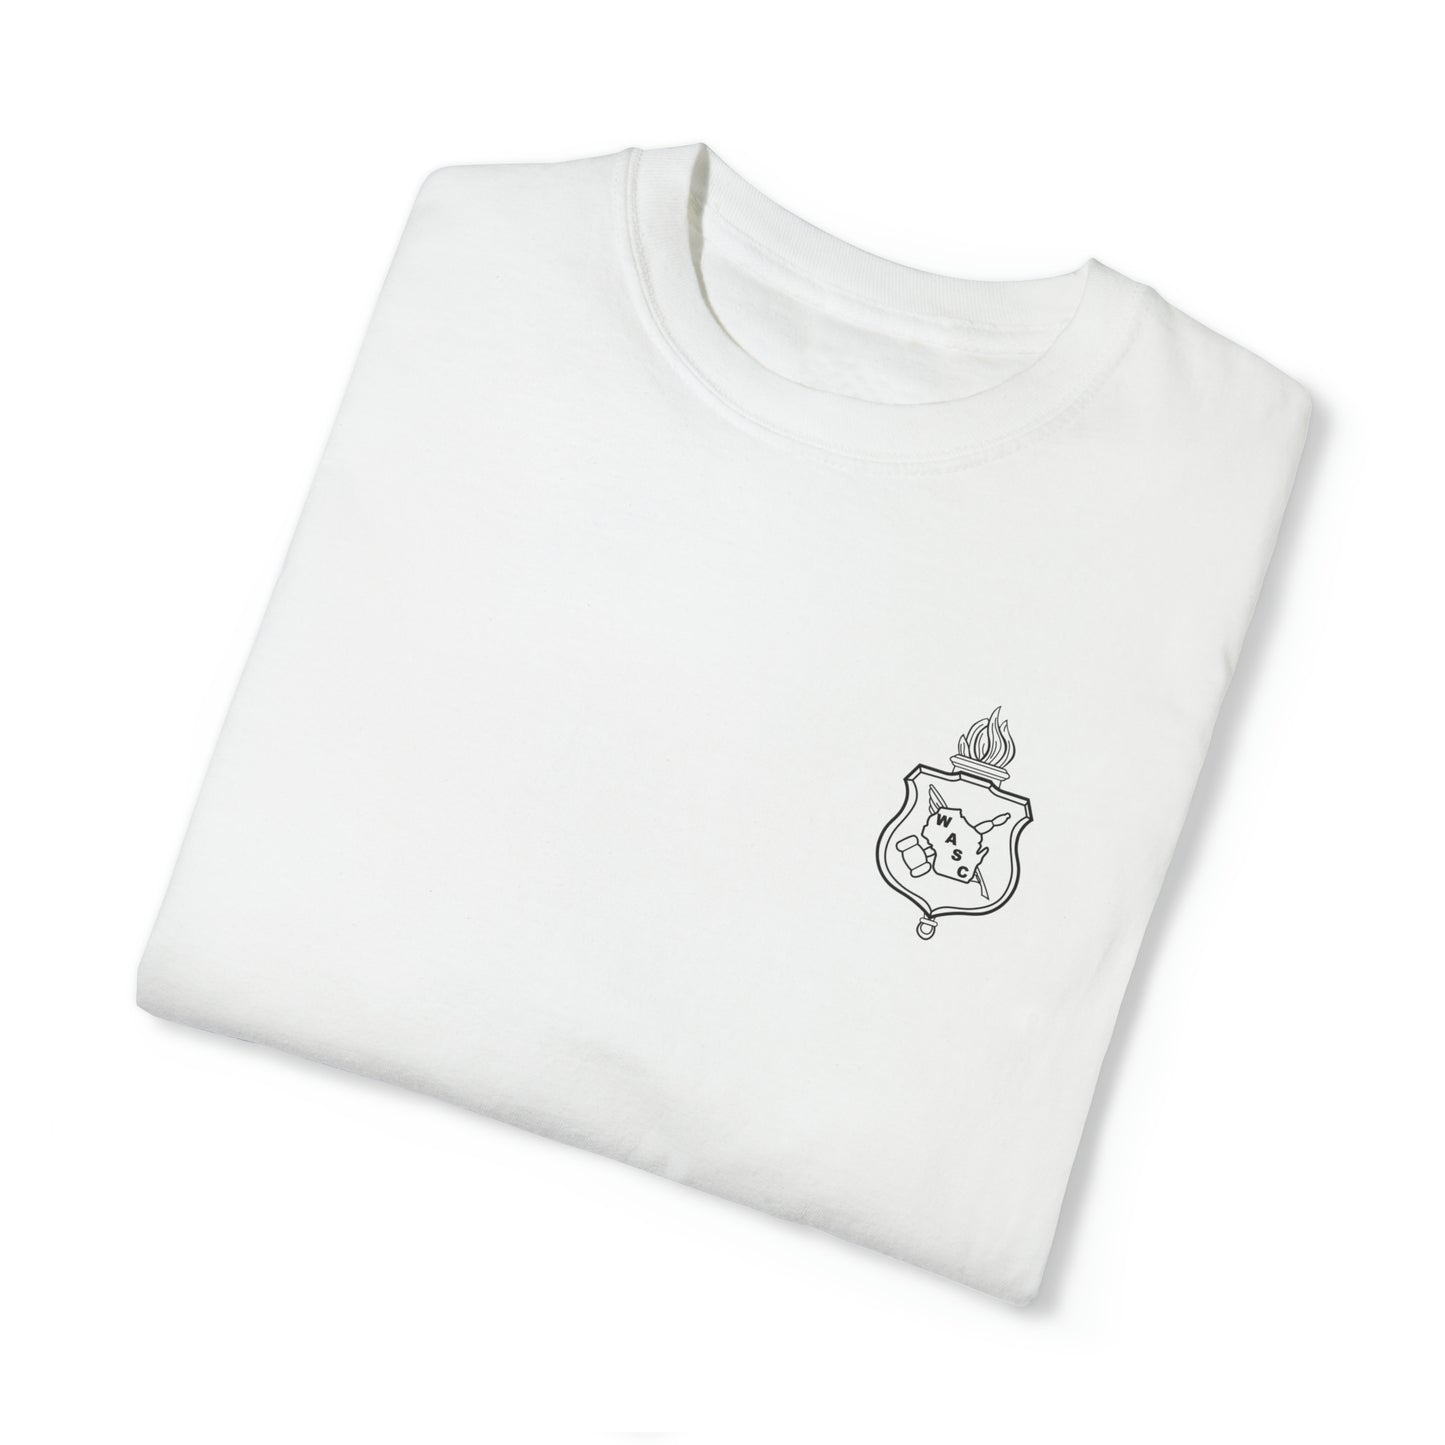 WASC Logo Comfort Colors T-Shirt